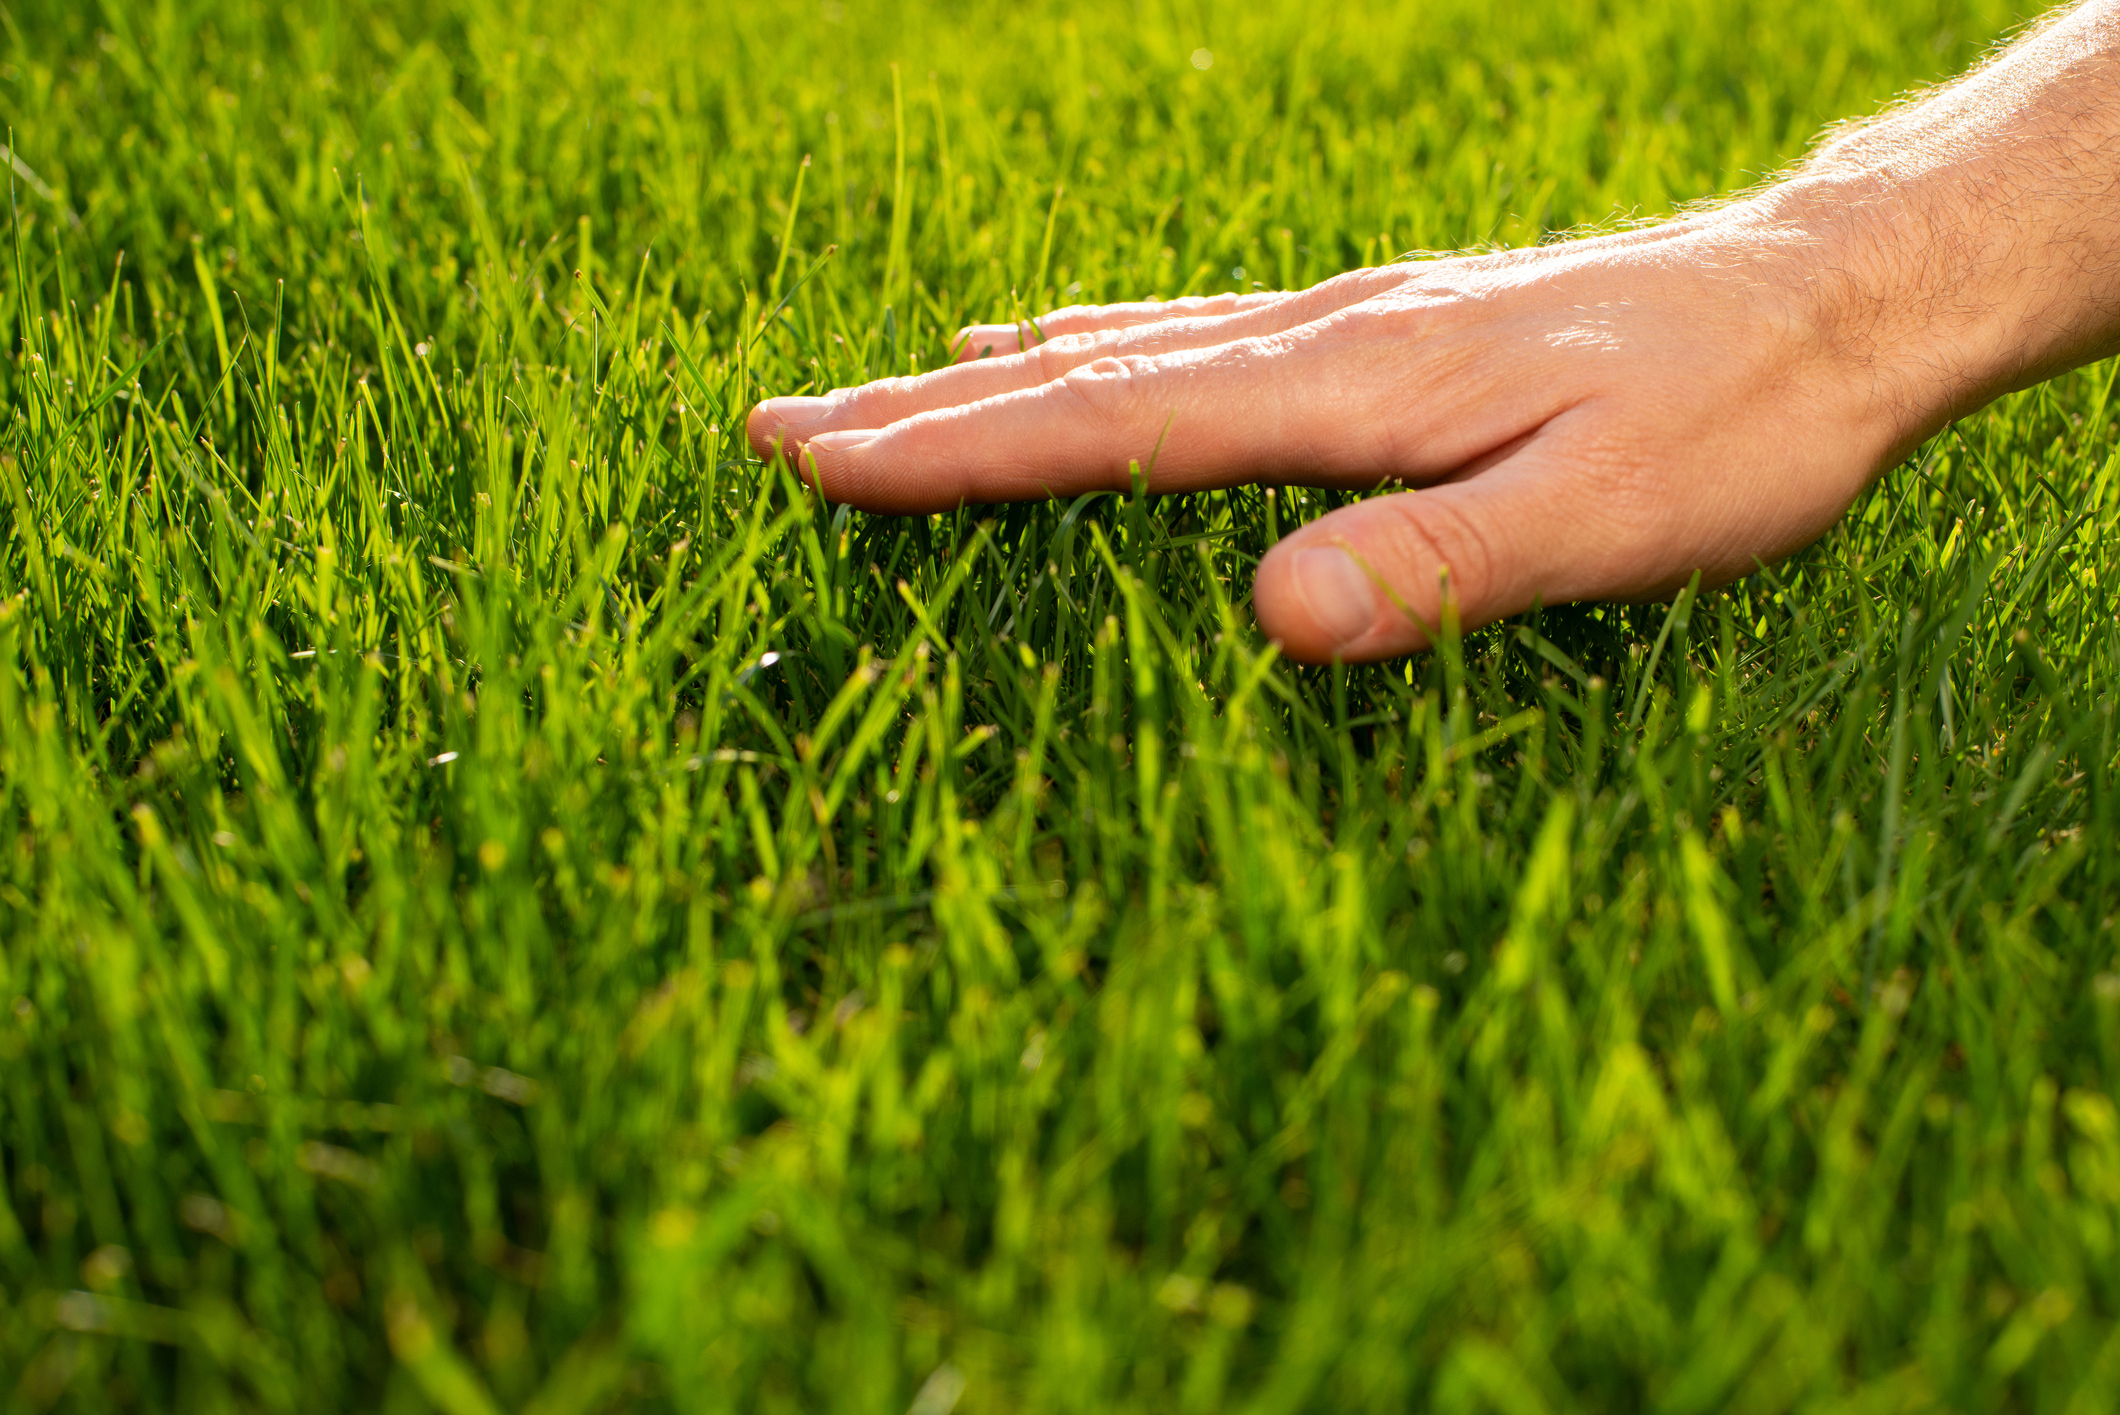 Human palm touching lawn grass low angle view